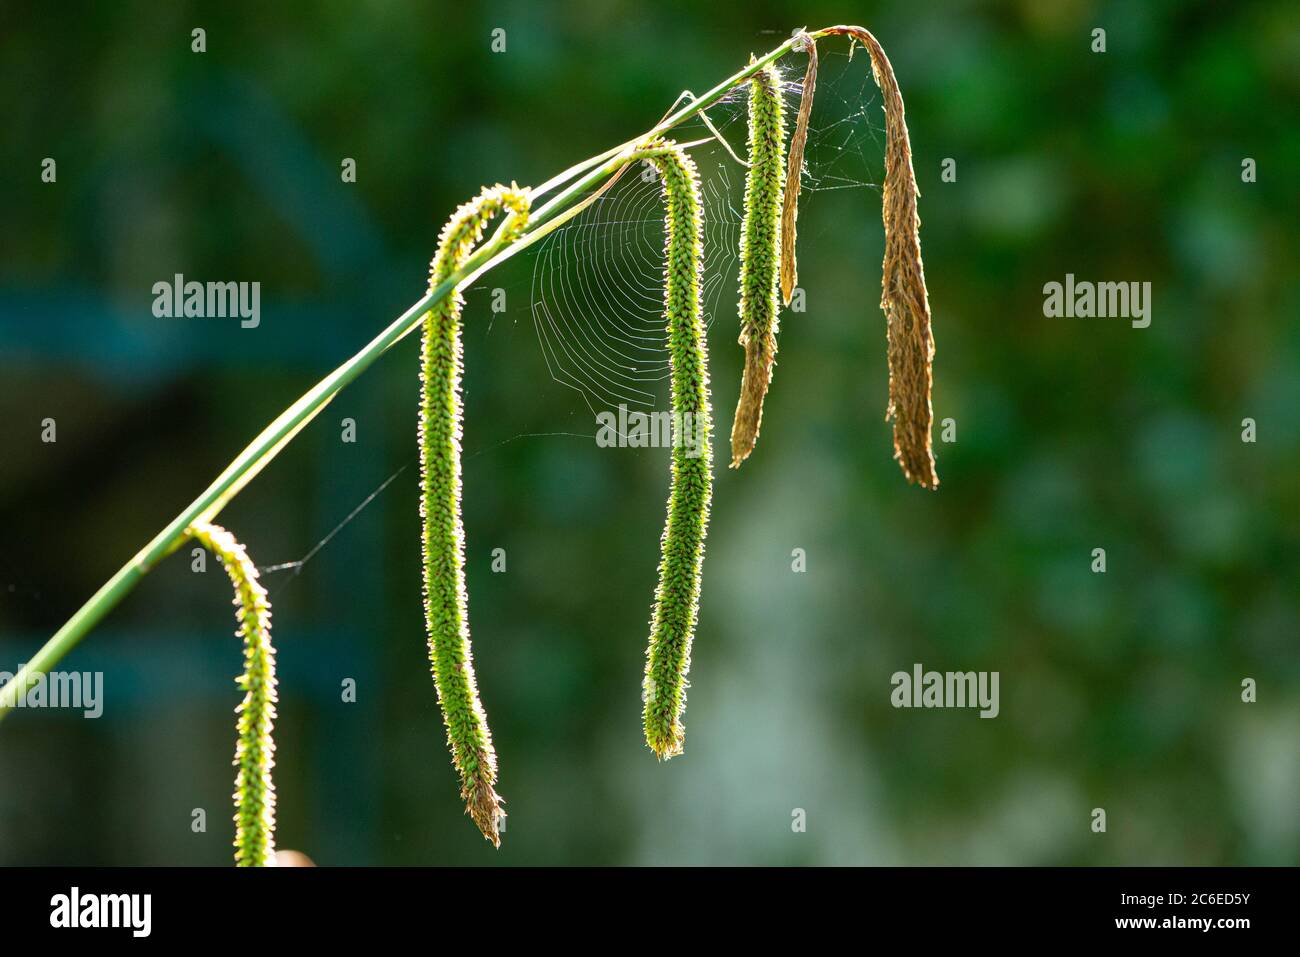 Dallis grass and cobwebs, Chipping,Preston,Lancashire,UK Stock Photo